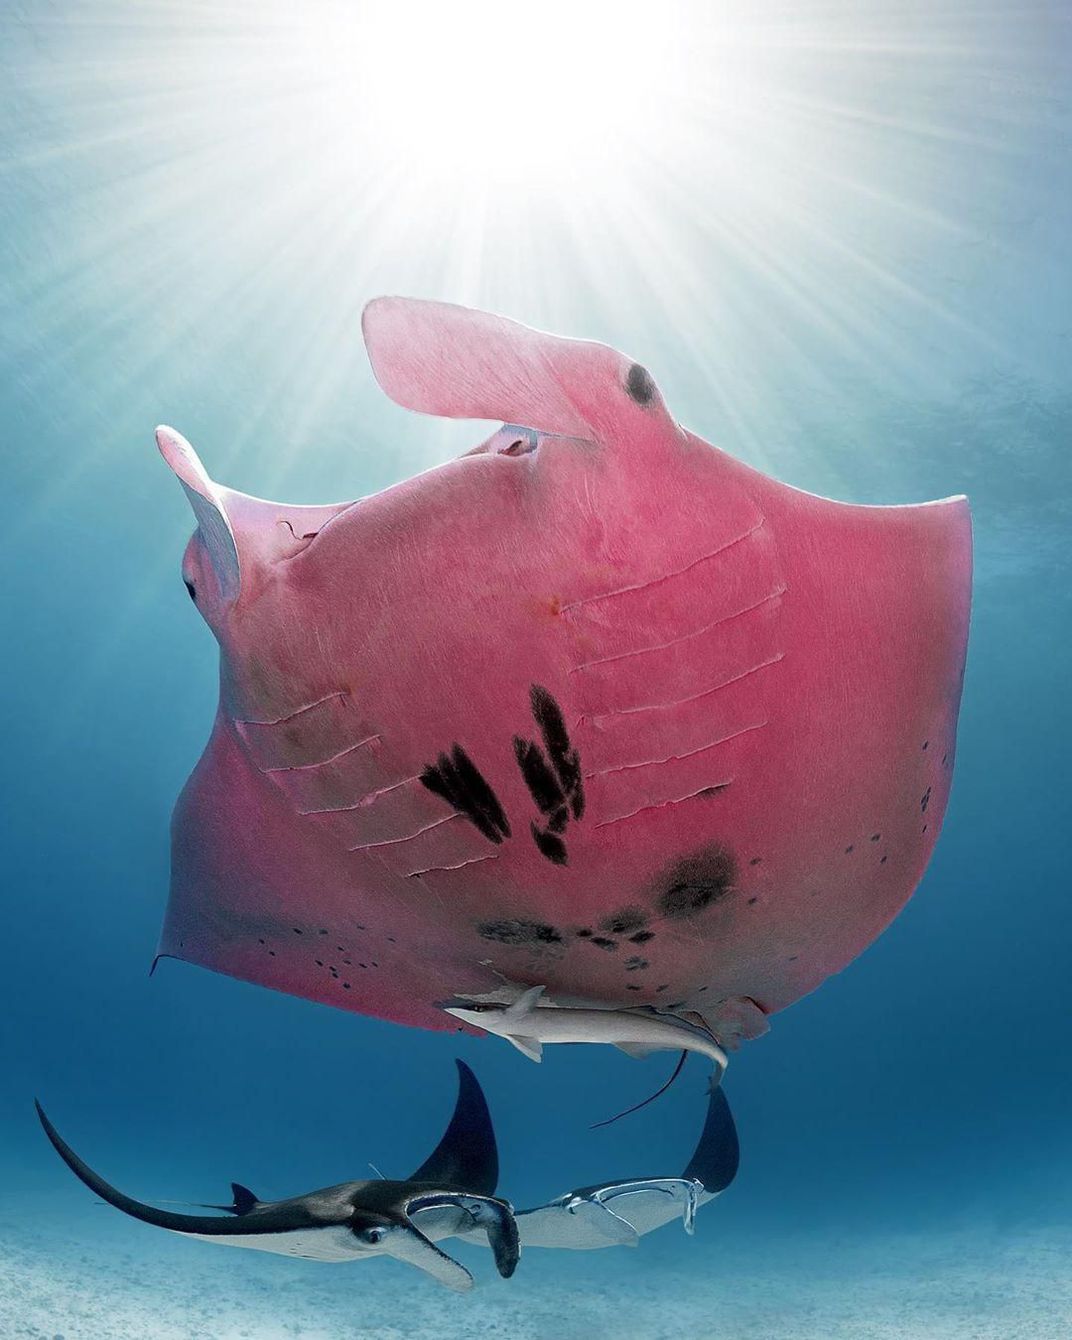 https://polit.ru/media/photolib/2020/02/14/ps_pink-manta-ray-great-barrier-reef-2.jpg